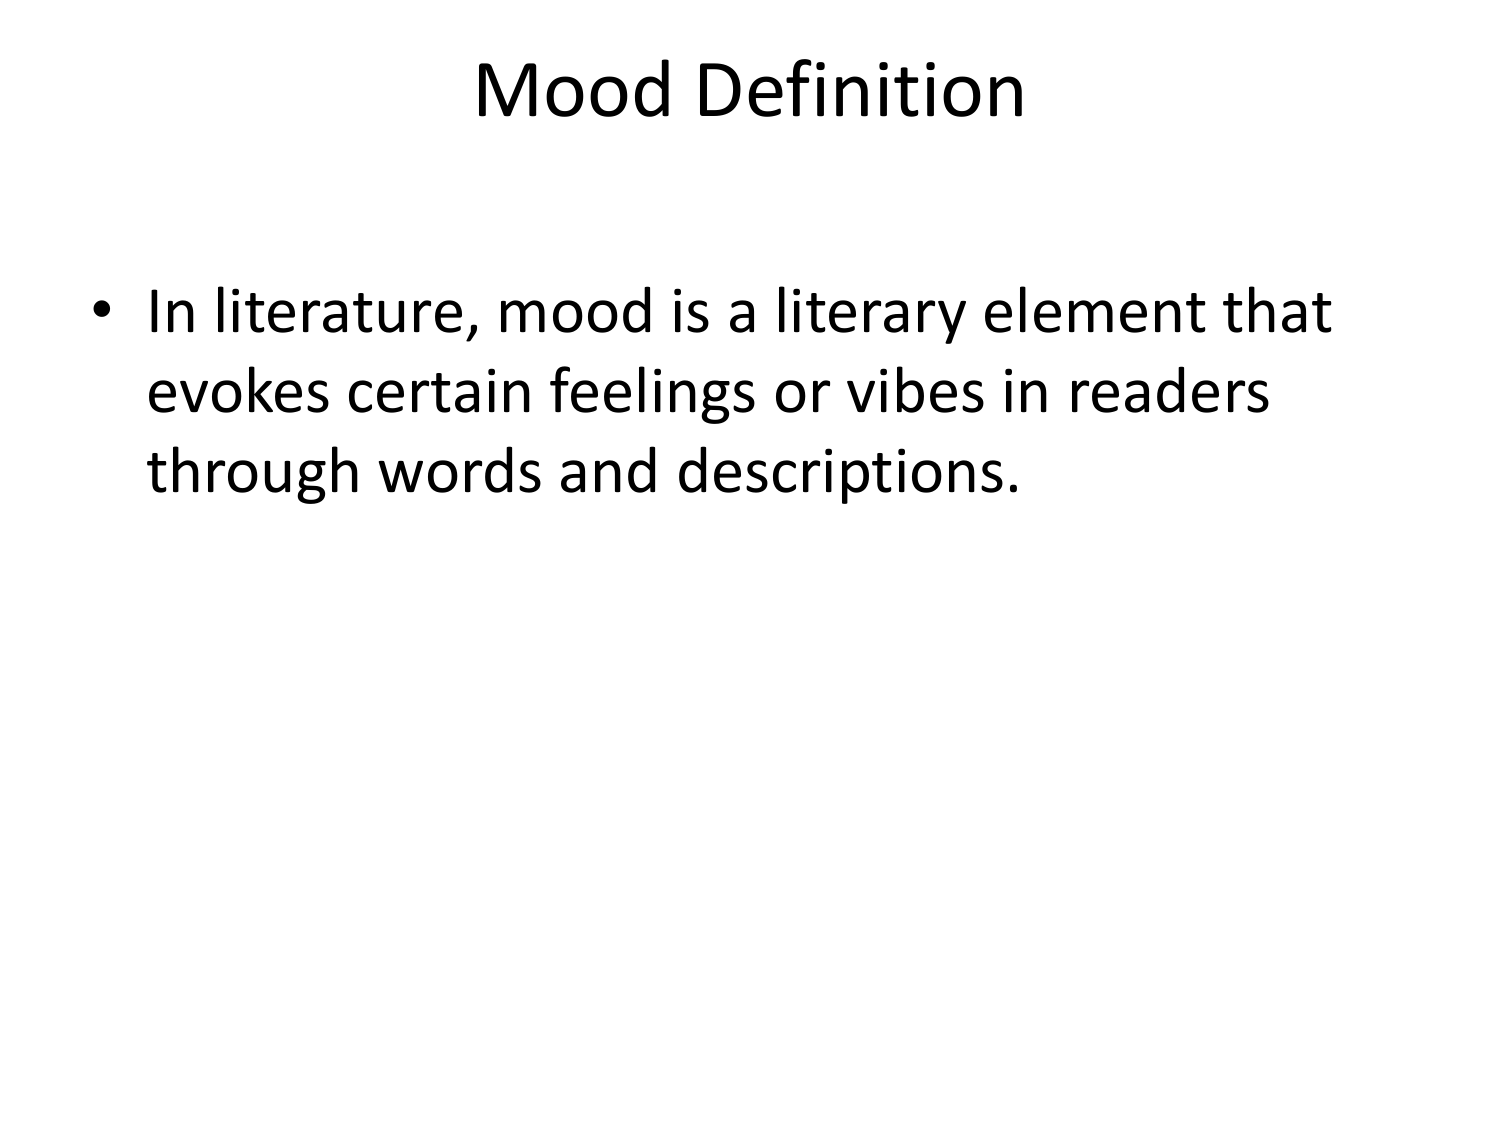 mood definition literature part of speech